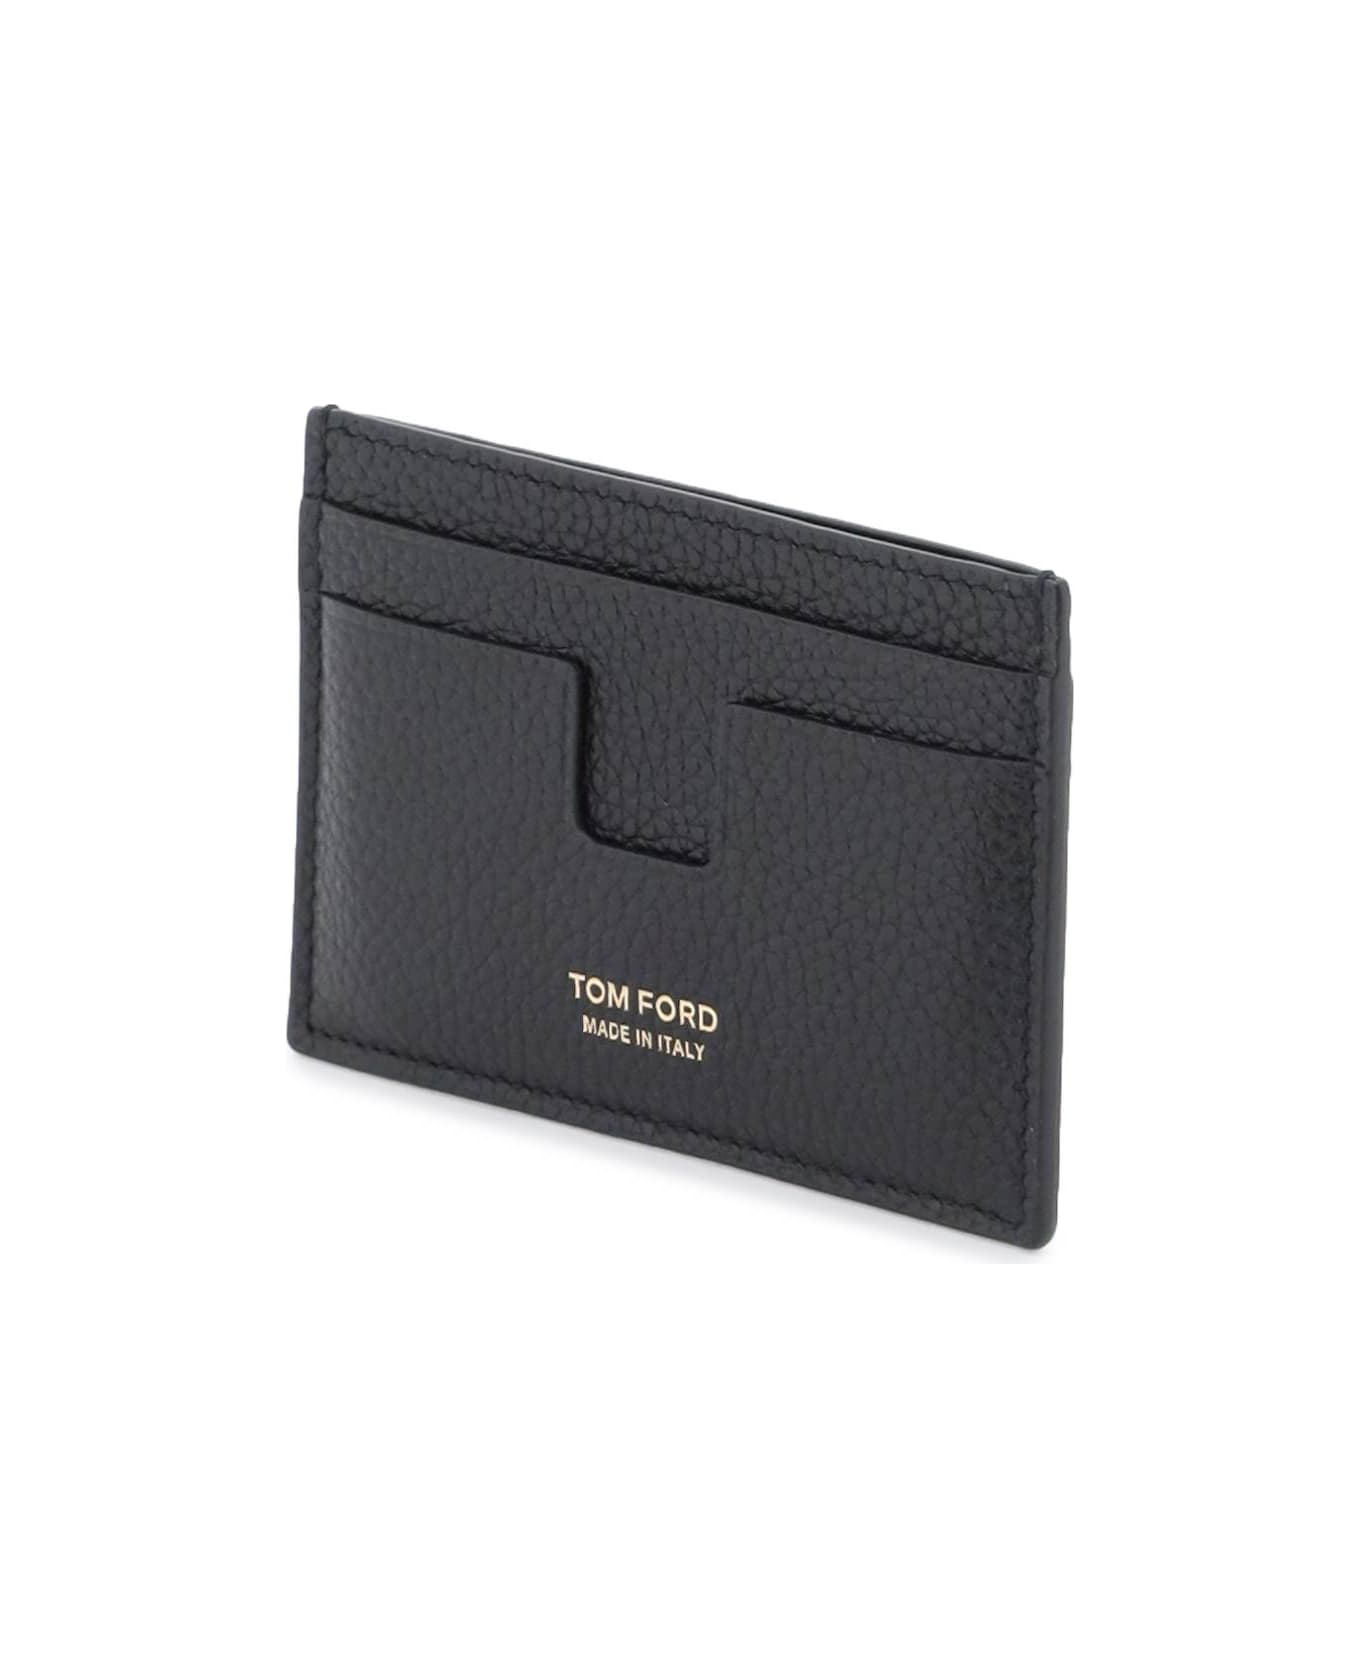 Tom Ford Leather Card Holder - black バッグ